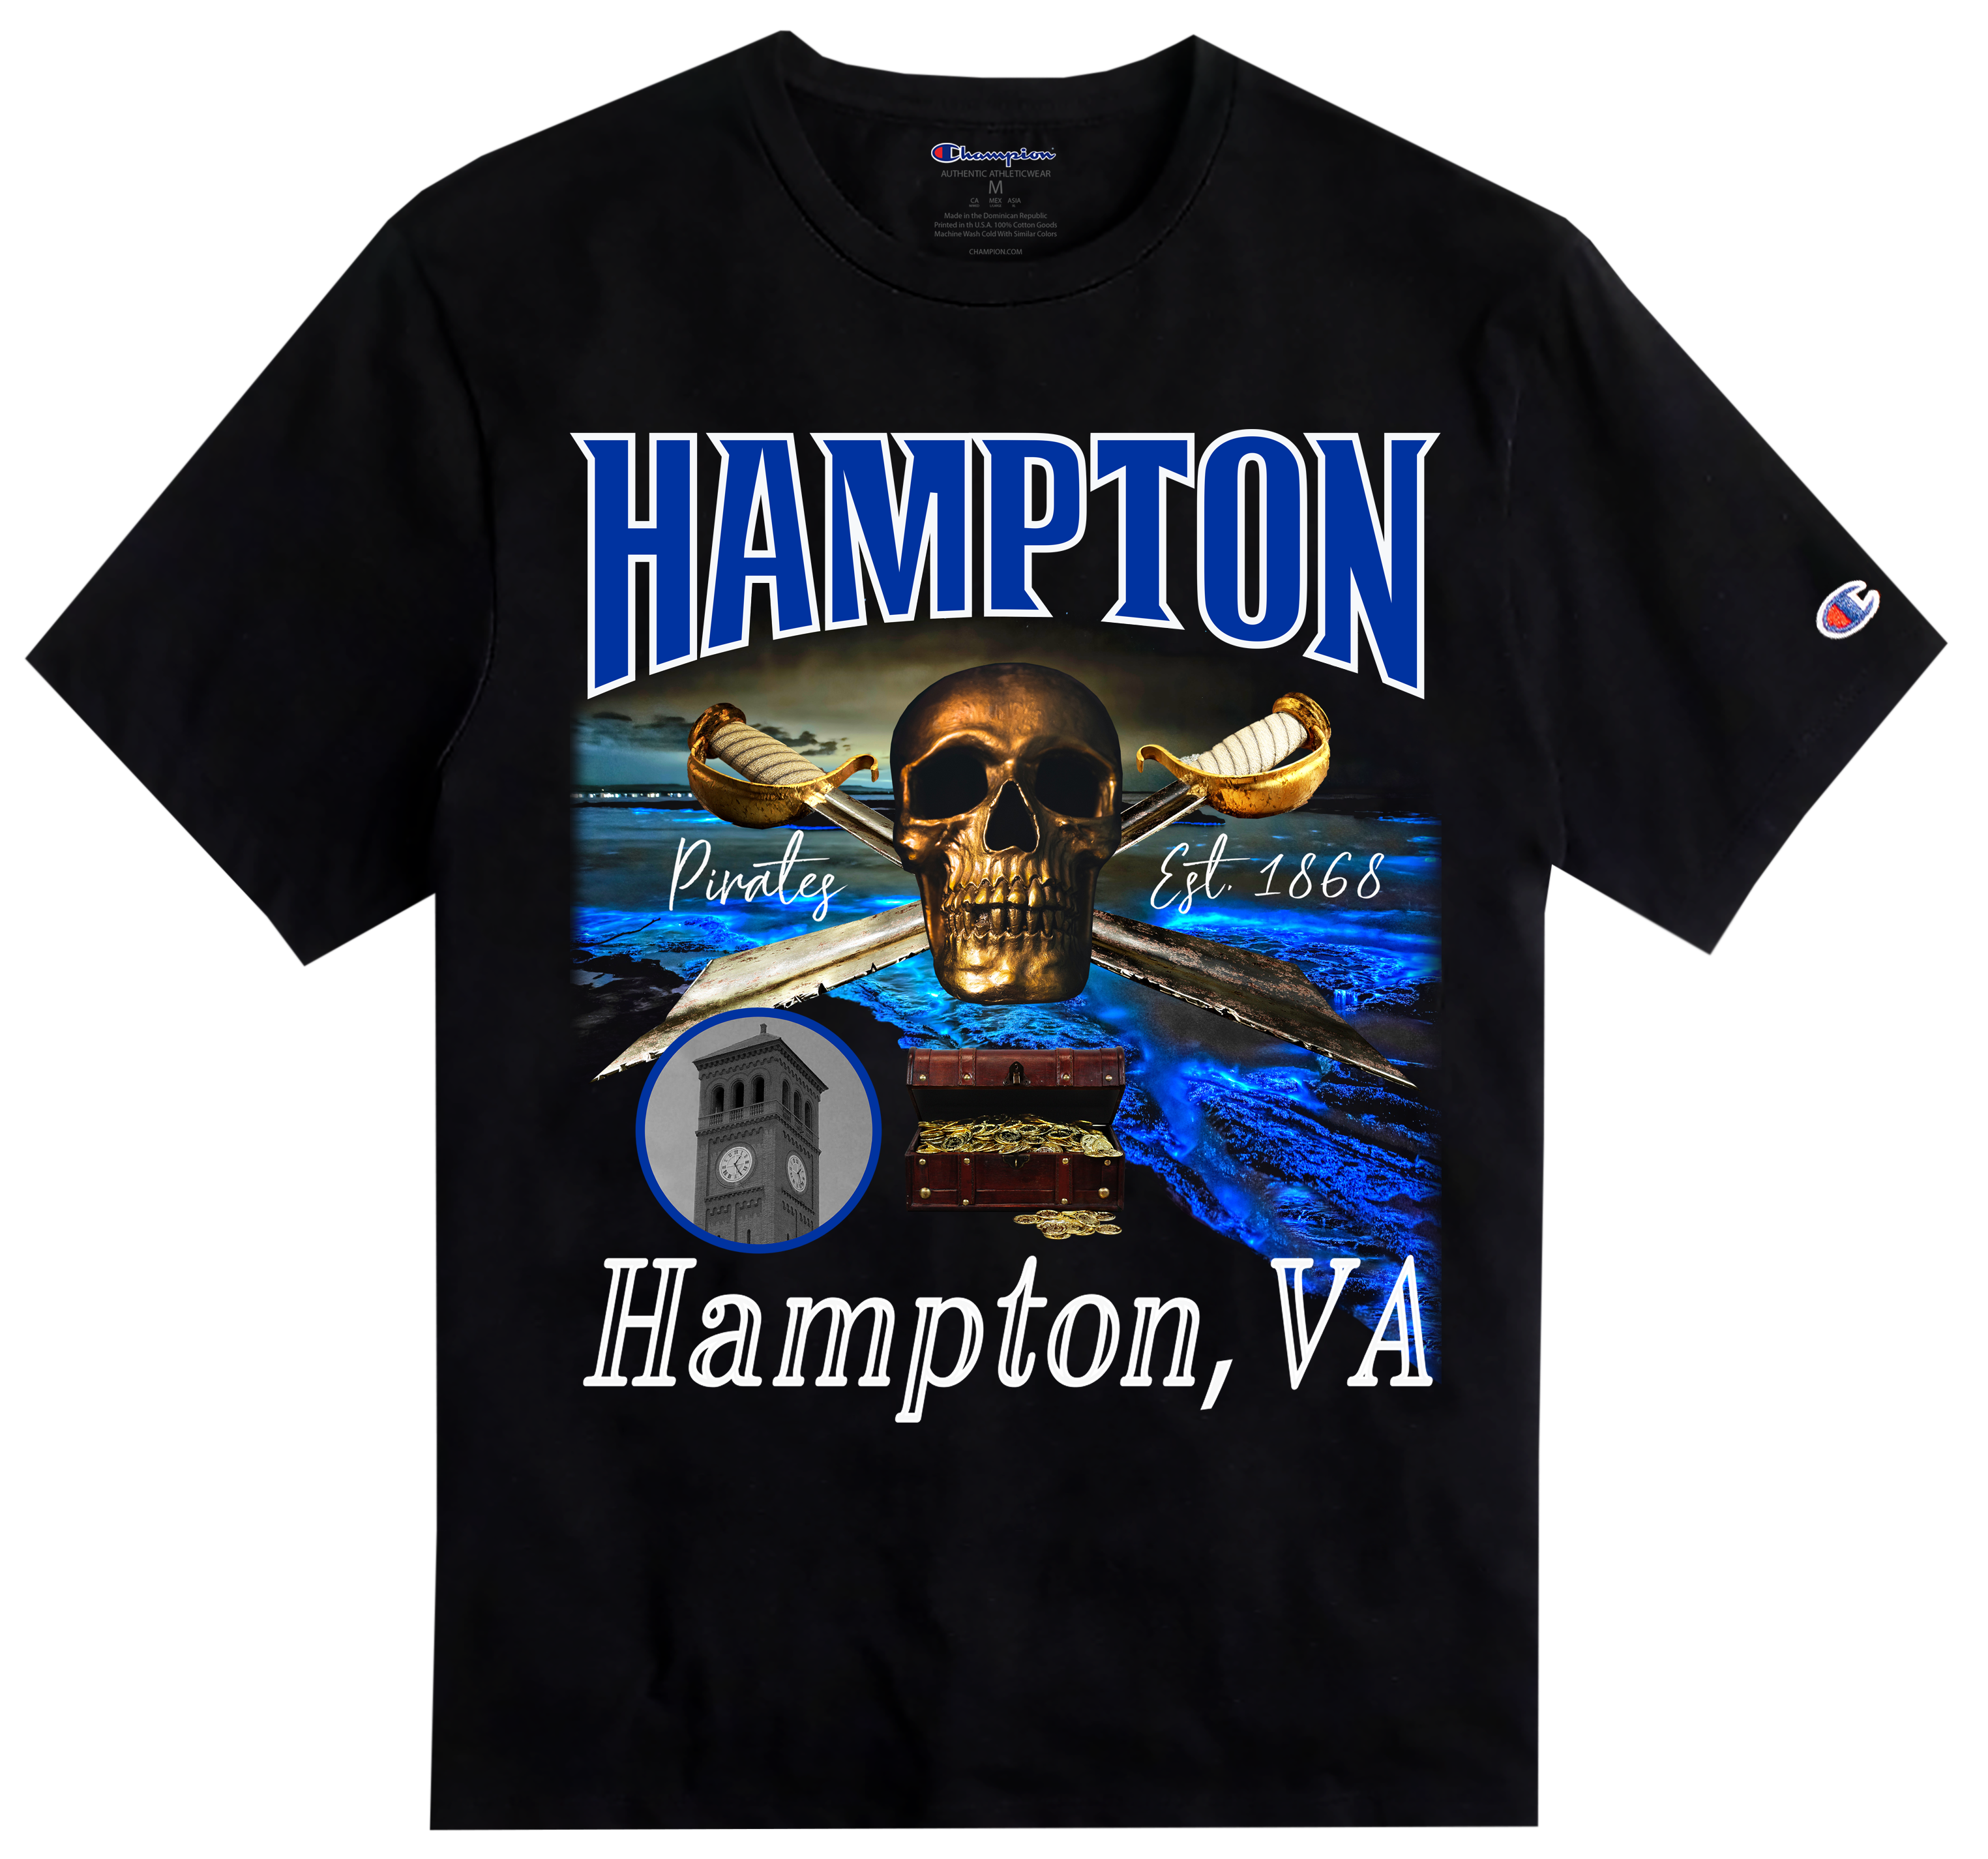 BCU X Champion Original HBCU Americana Rap Tee - Hampton